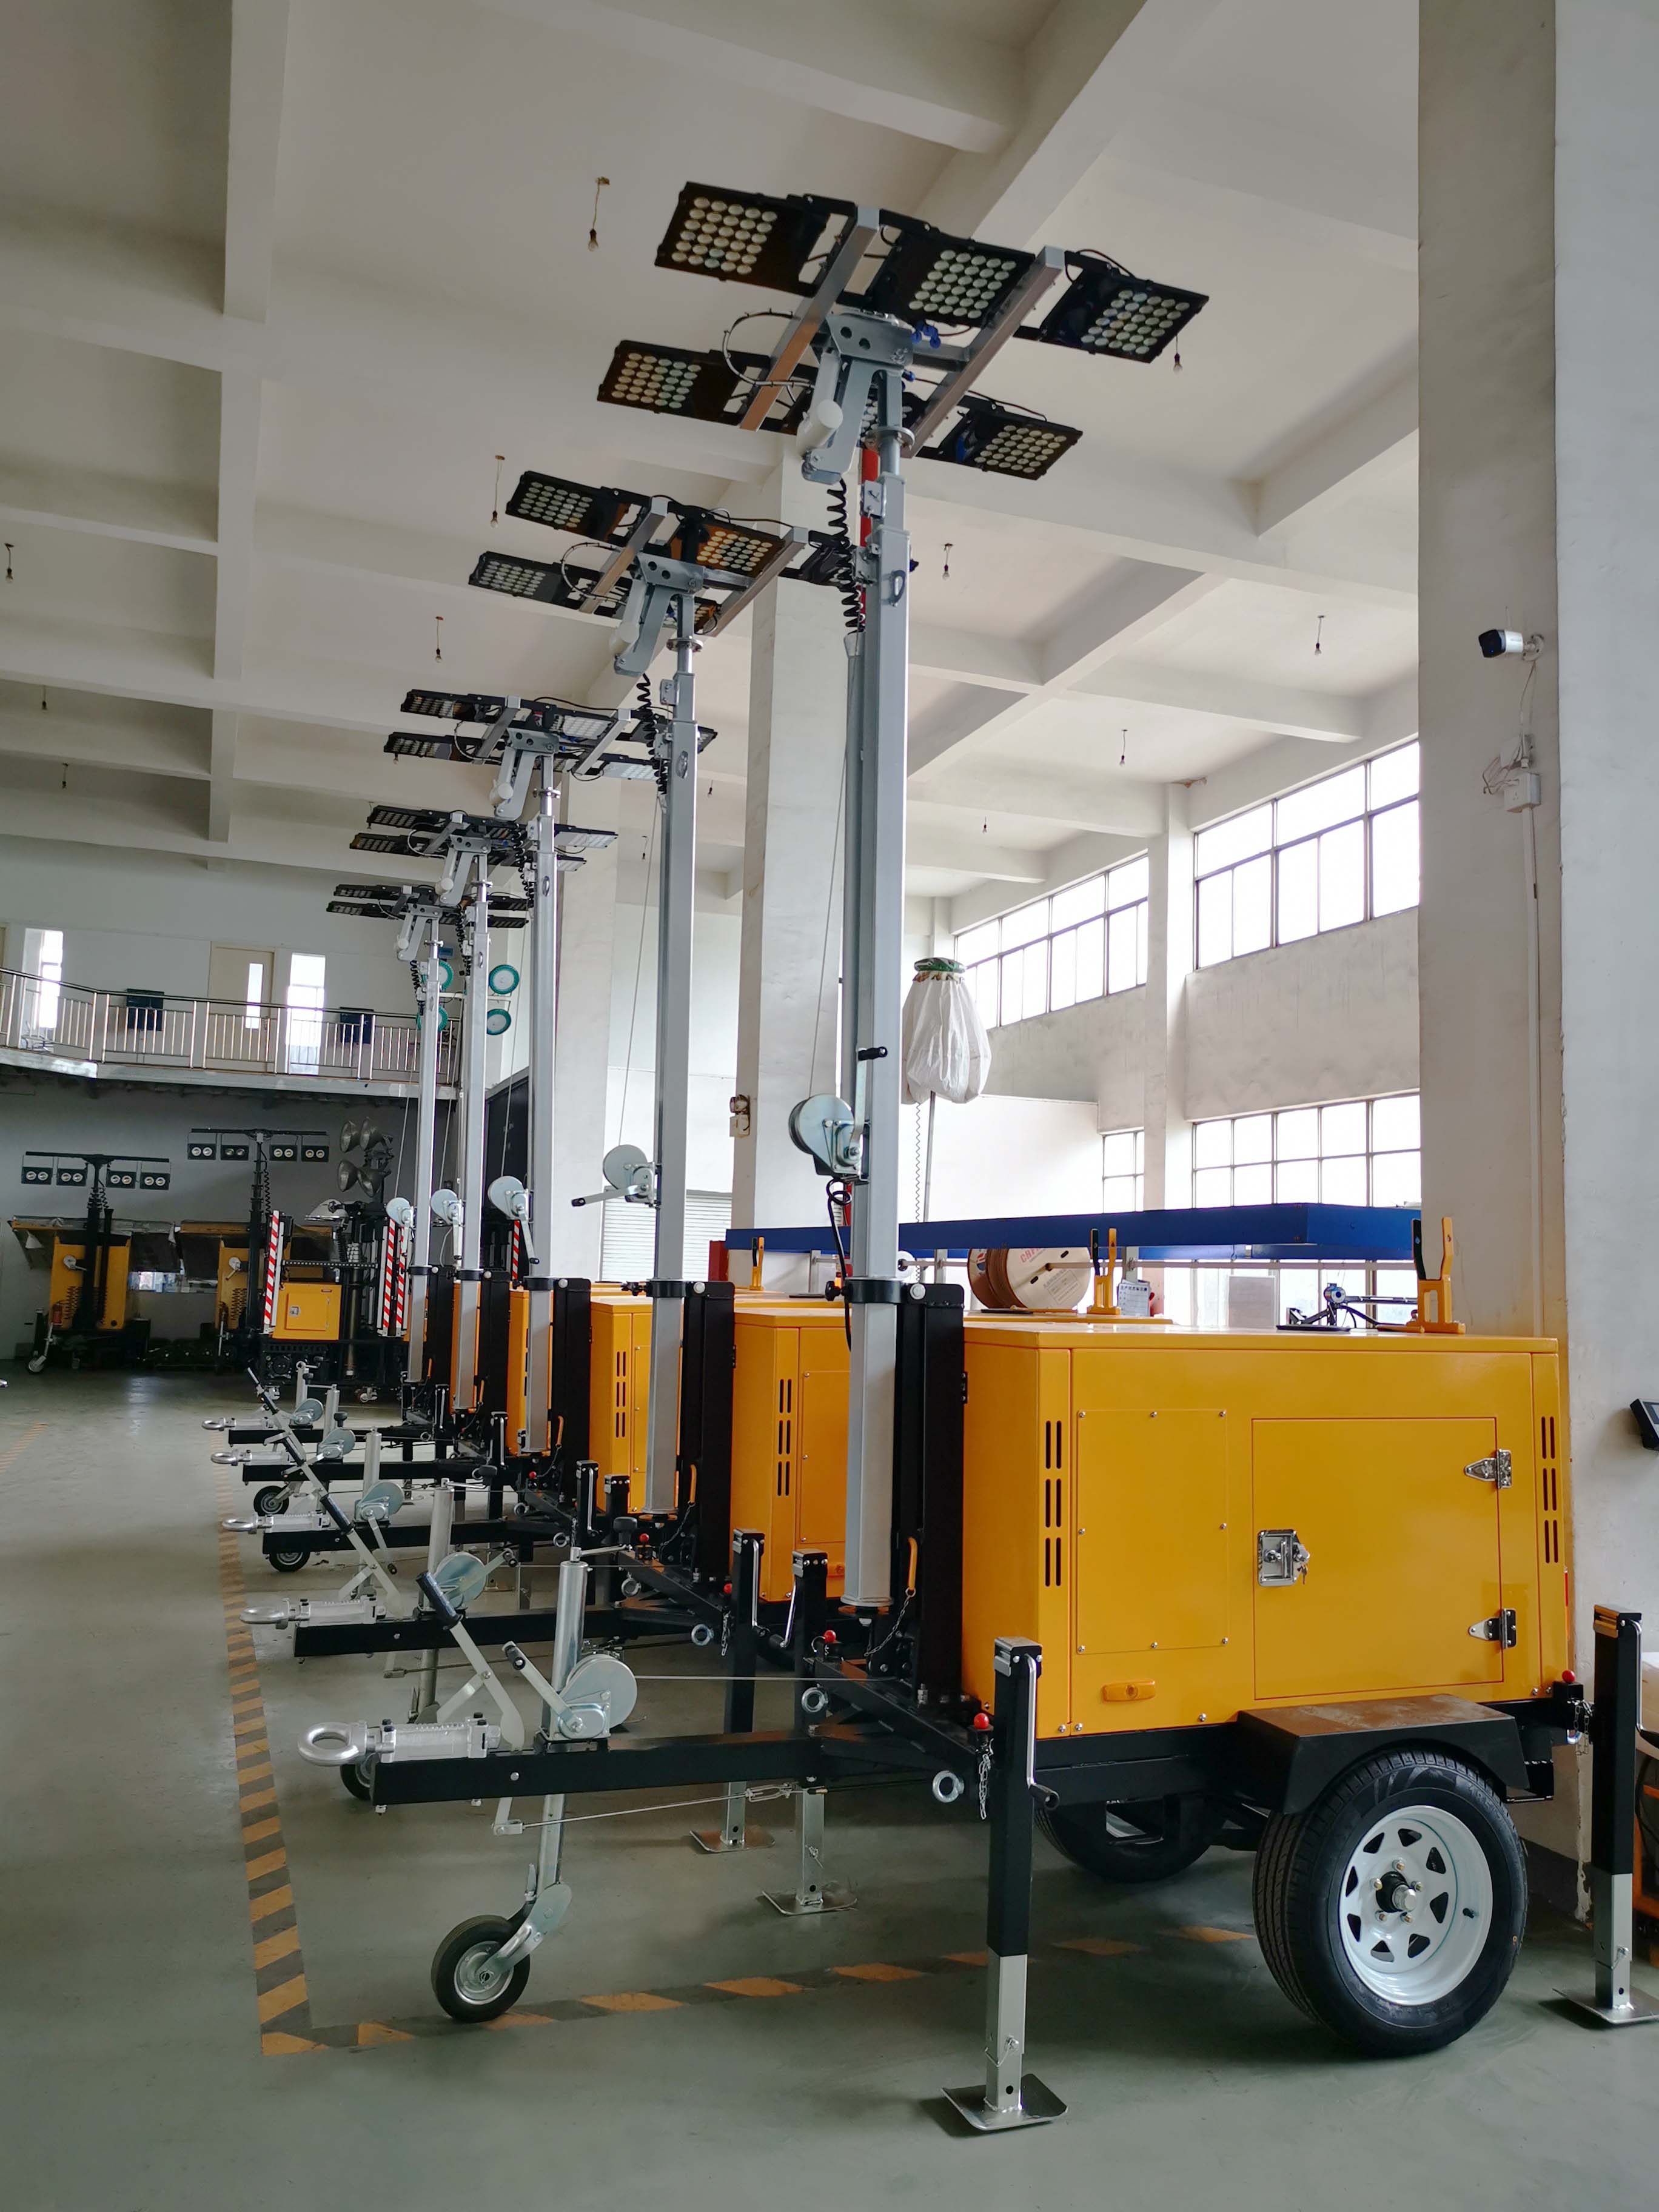 Diesel portable generator with flood lights hydraulic lighting tower